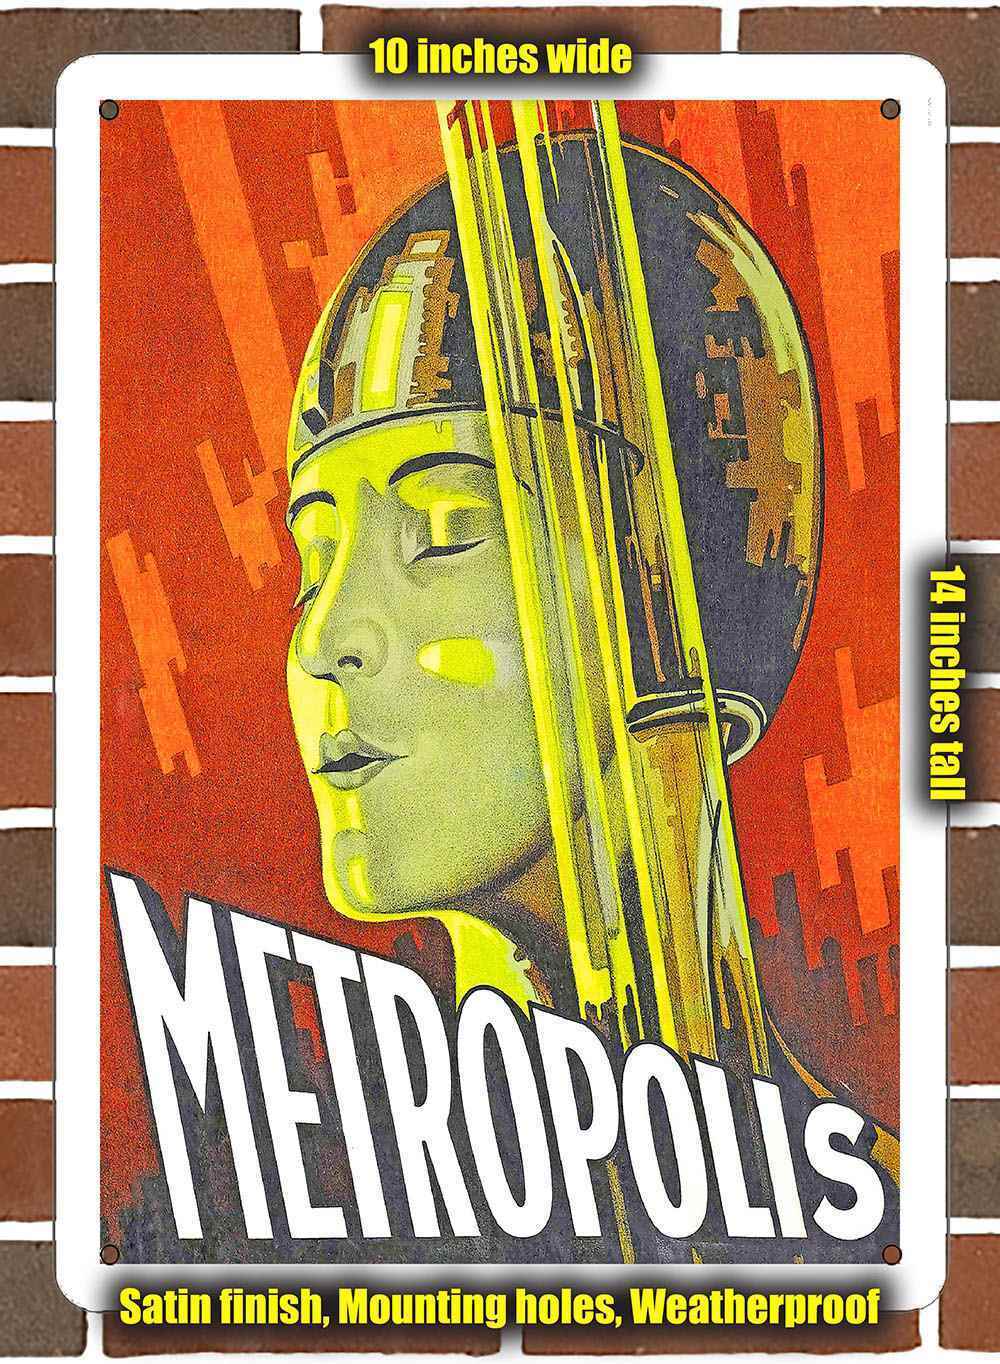 Metal Sign - 1927 Metropolis Movie - 10x14 inches